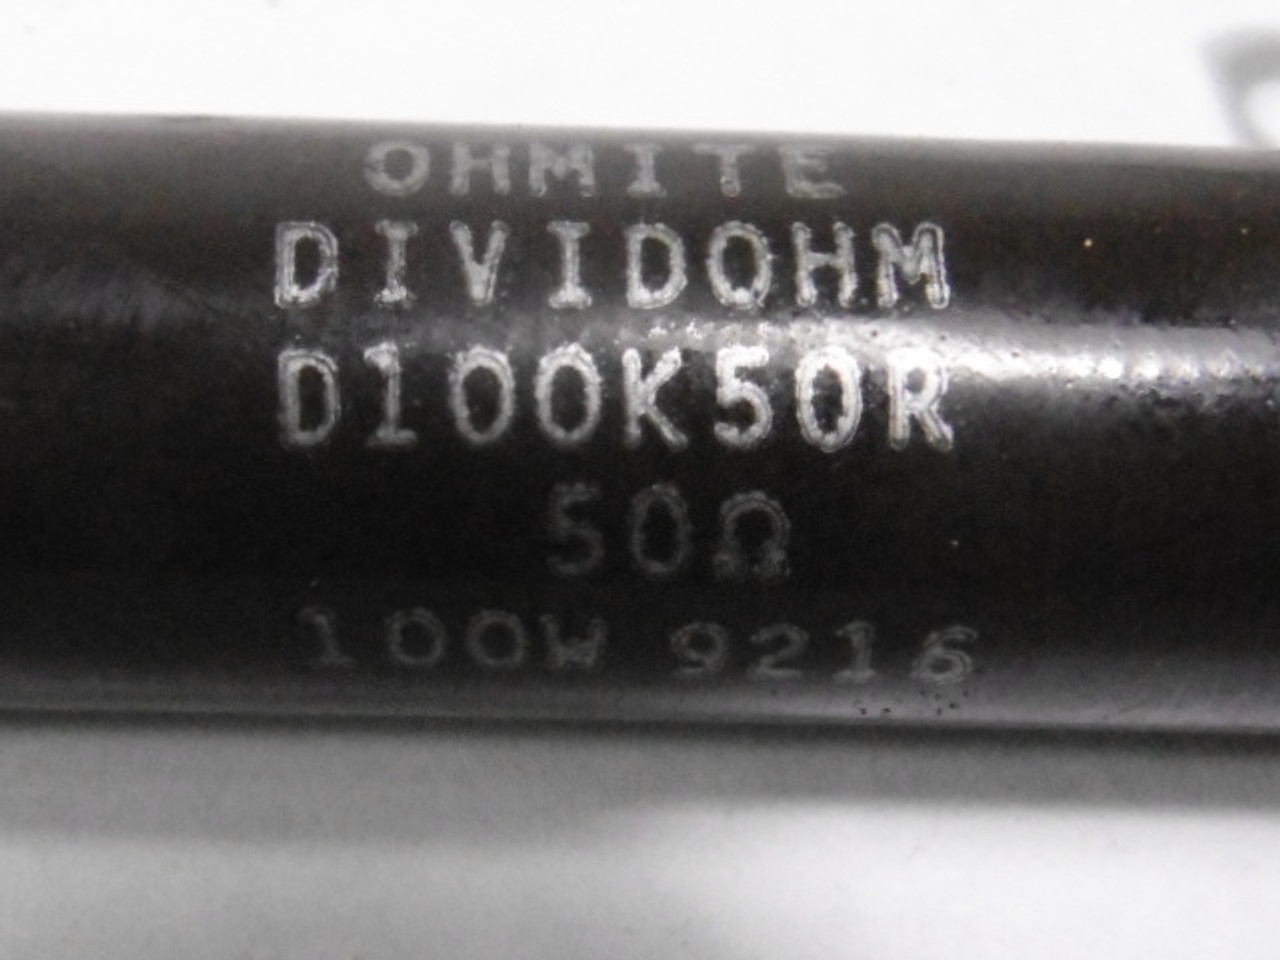 Ohmite D100K50R Resistor 100W 50 Ohm USED